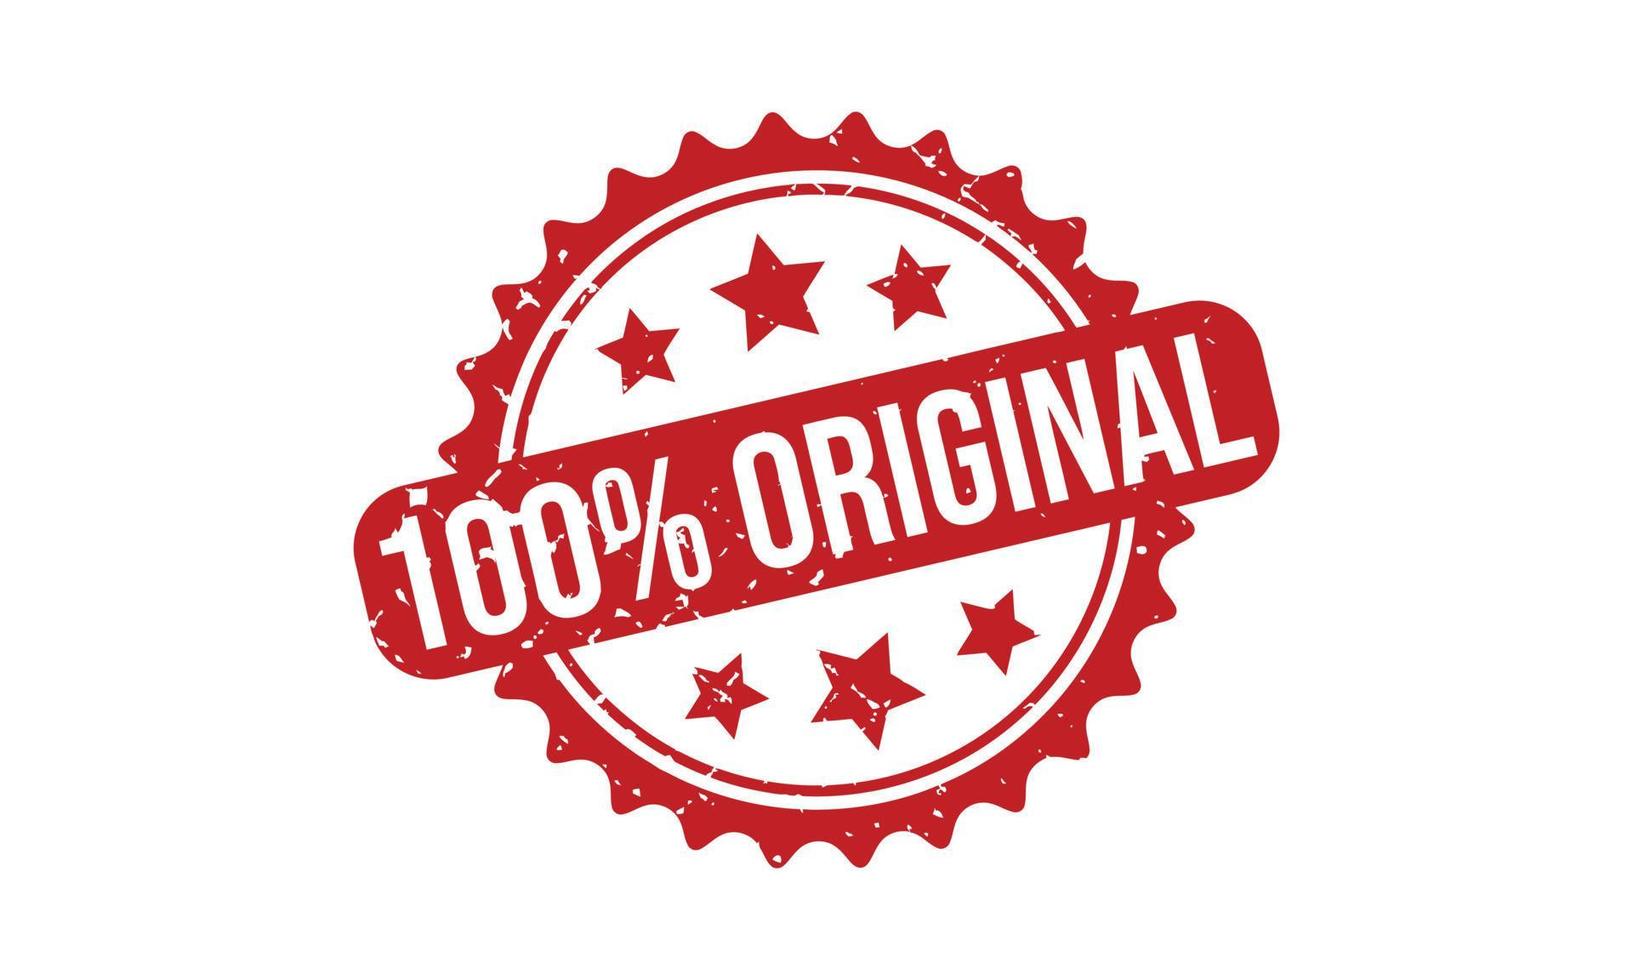 100 Percent Original Rubber Stamp vector